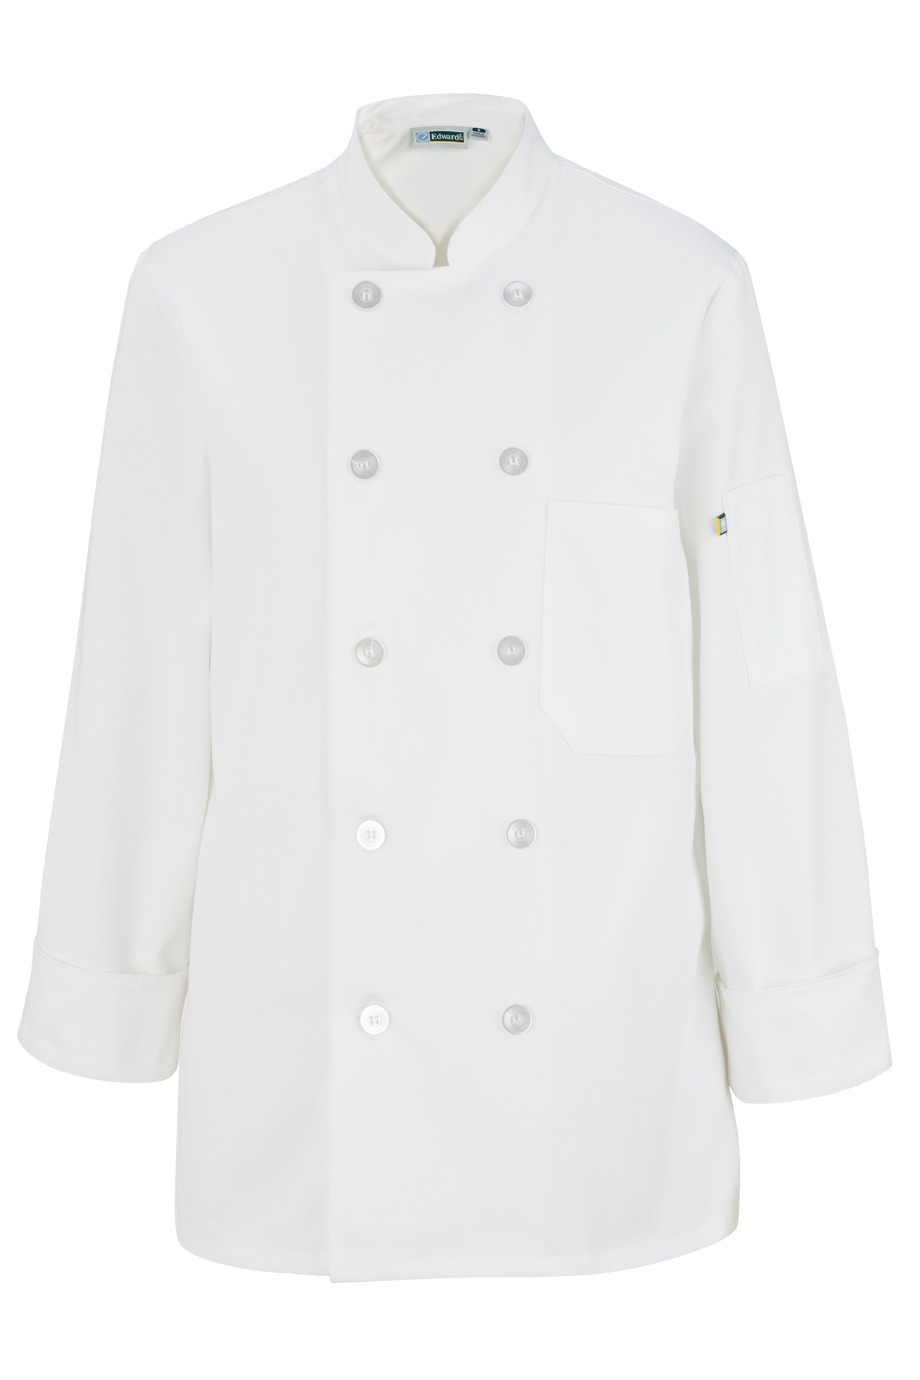 Edwards Garment 6301 - Women's Casual 10 Button Chef Coat